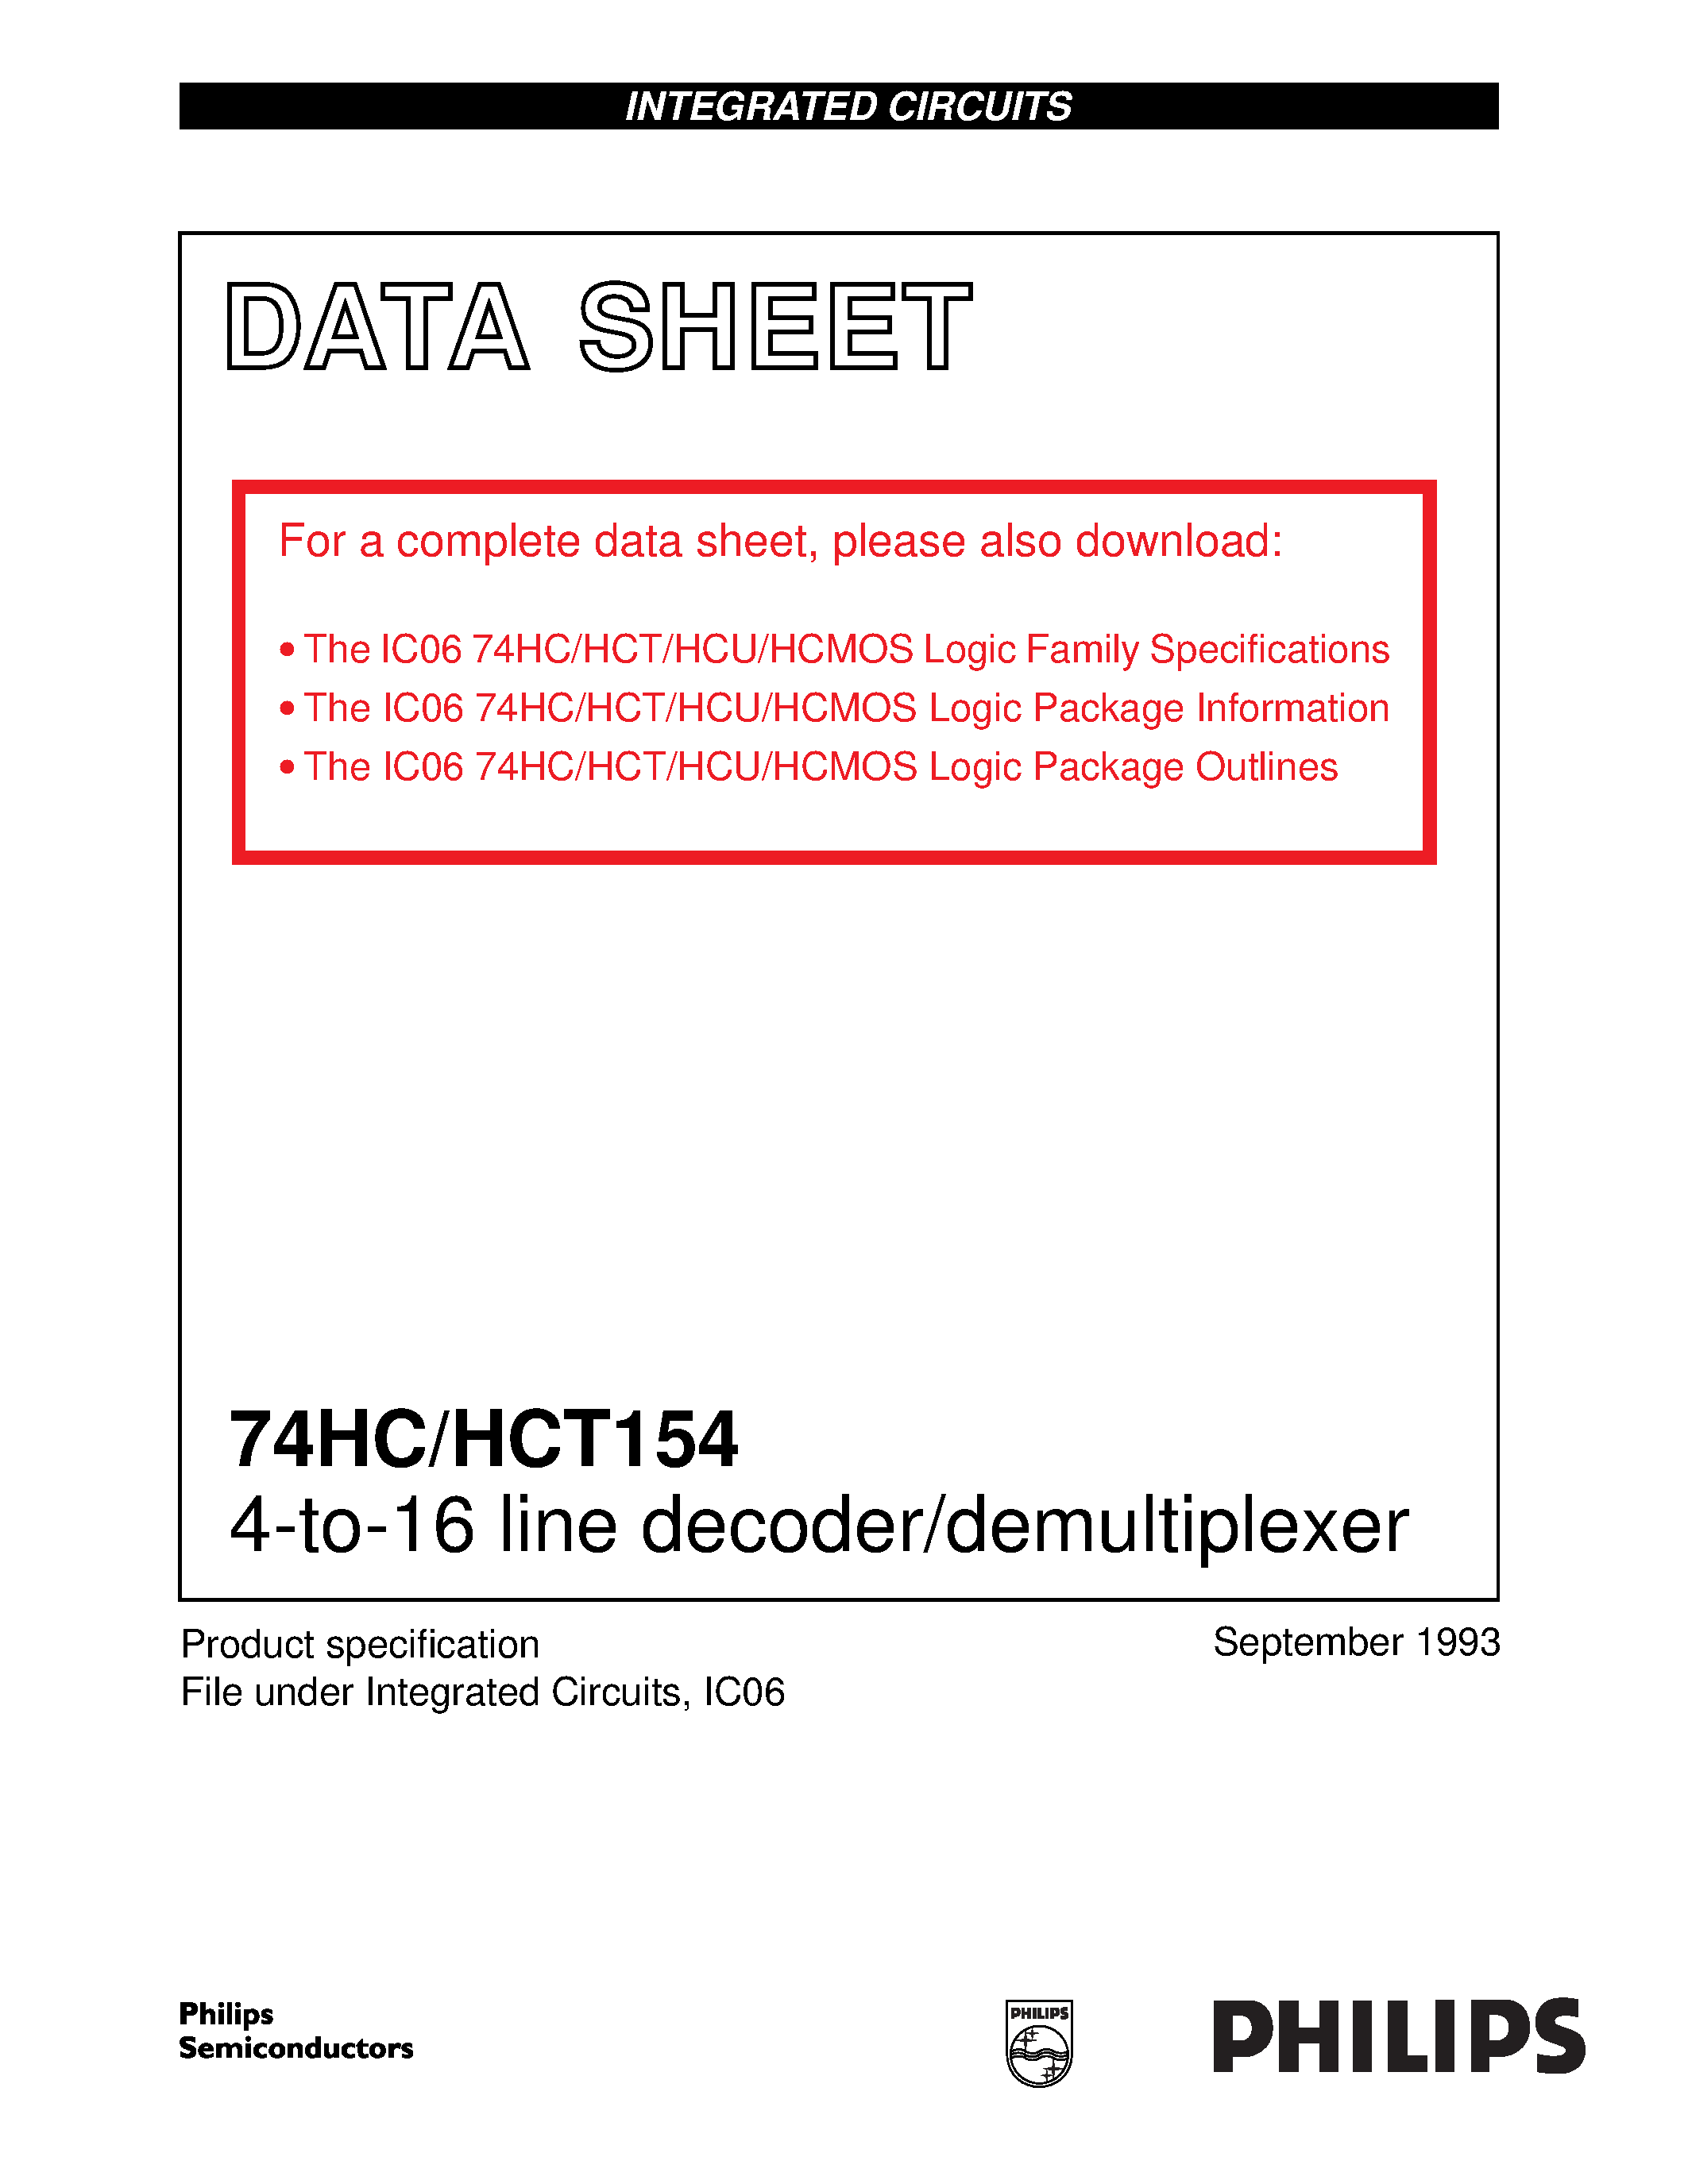 Даташит 74HCT154 - 4-to-16 line decoder/demultiplexer страница 1